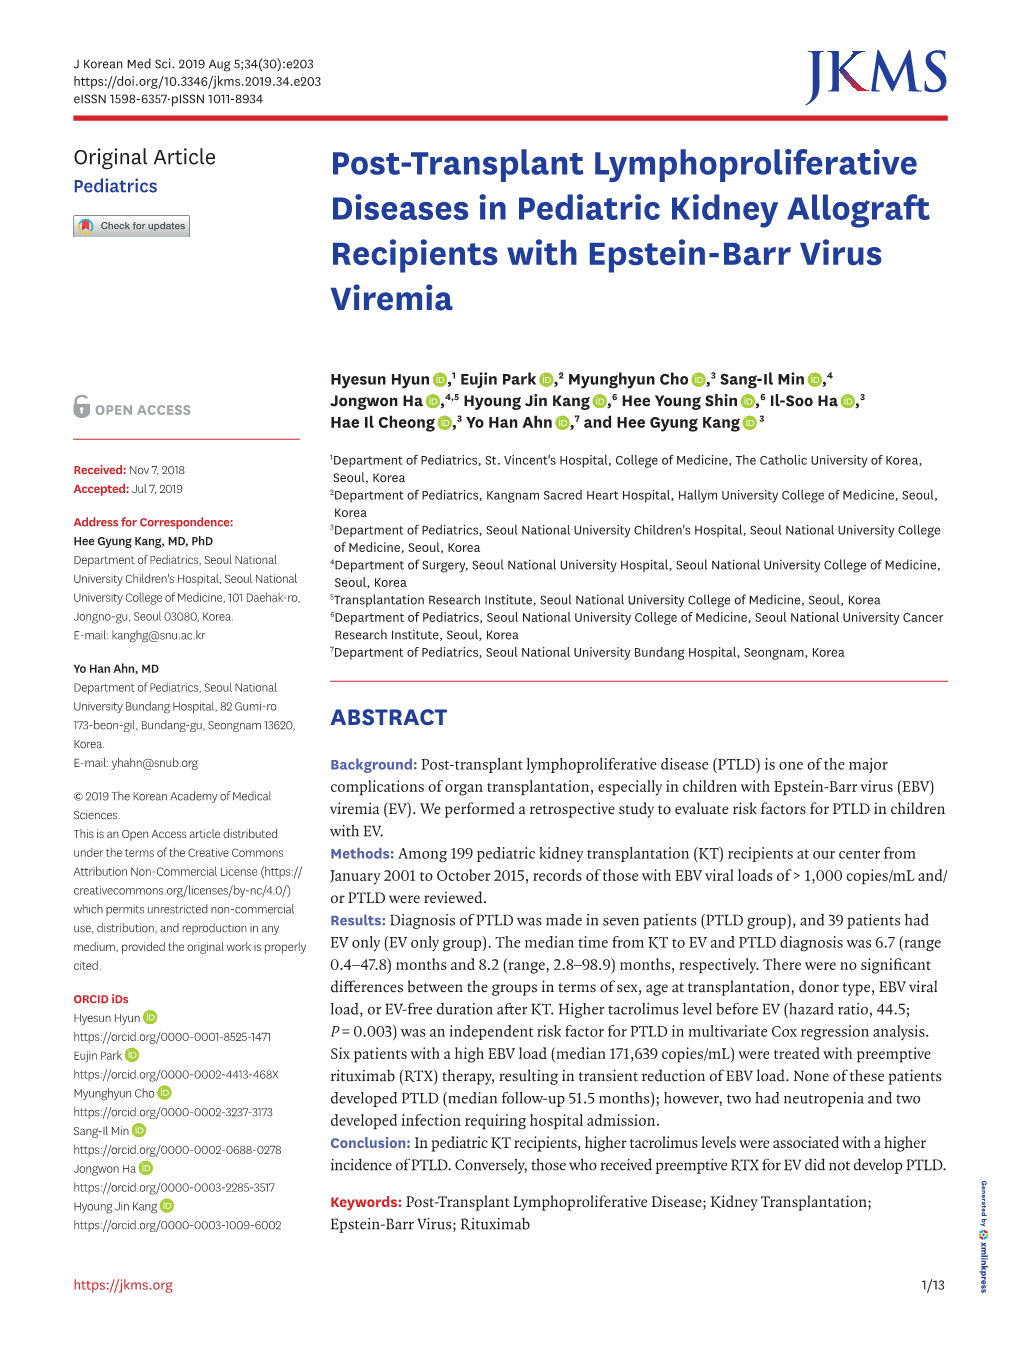 Post-Transplant Lymphoproliferative Diseases in Pediatric Kidney